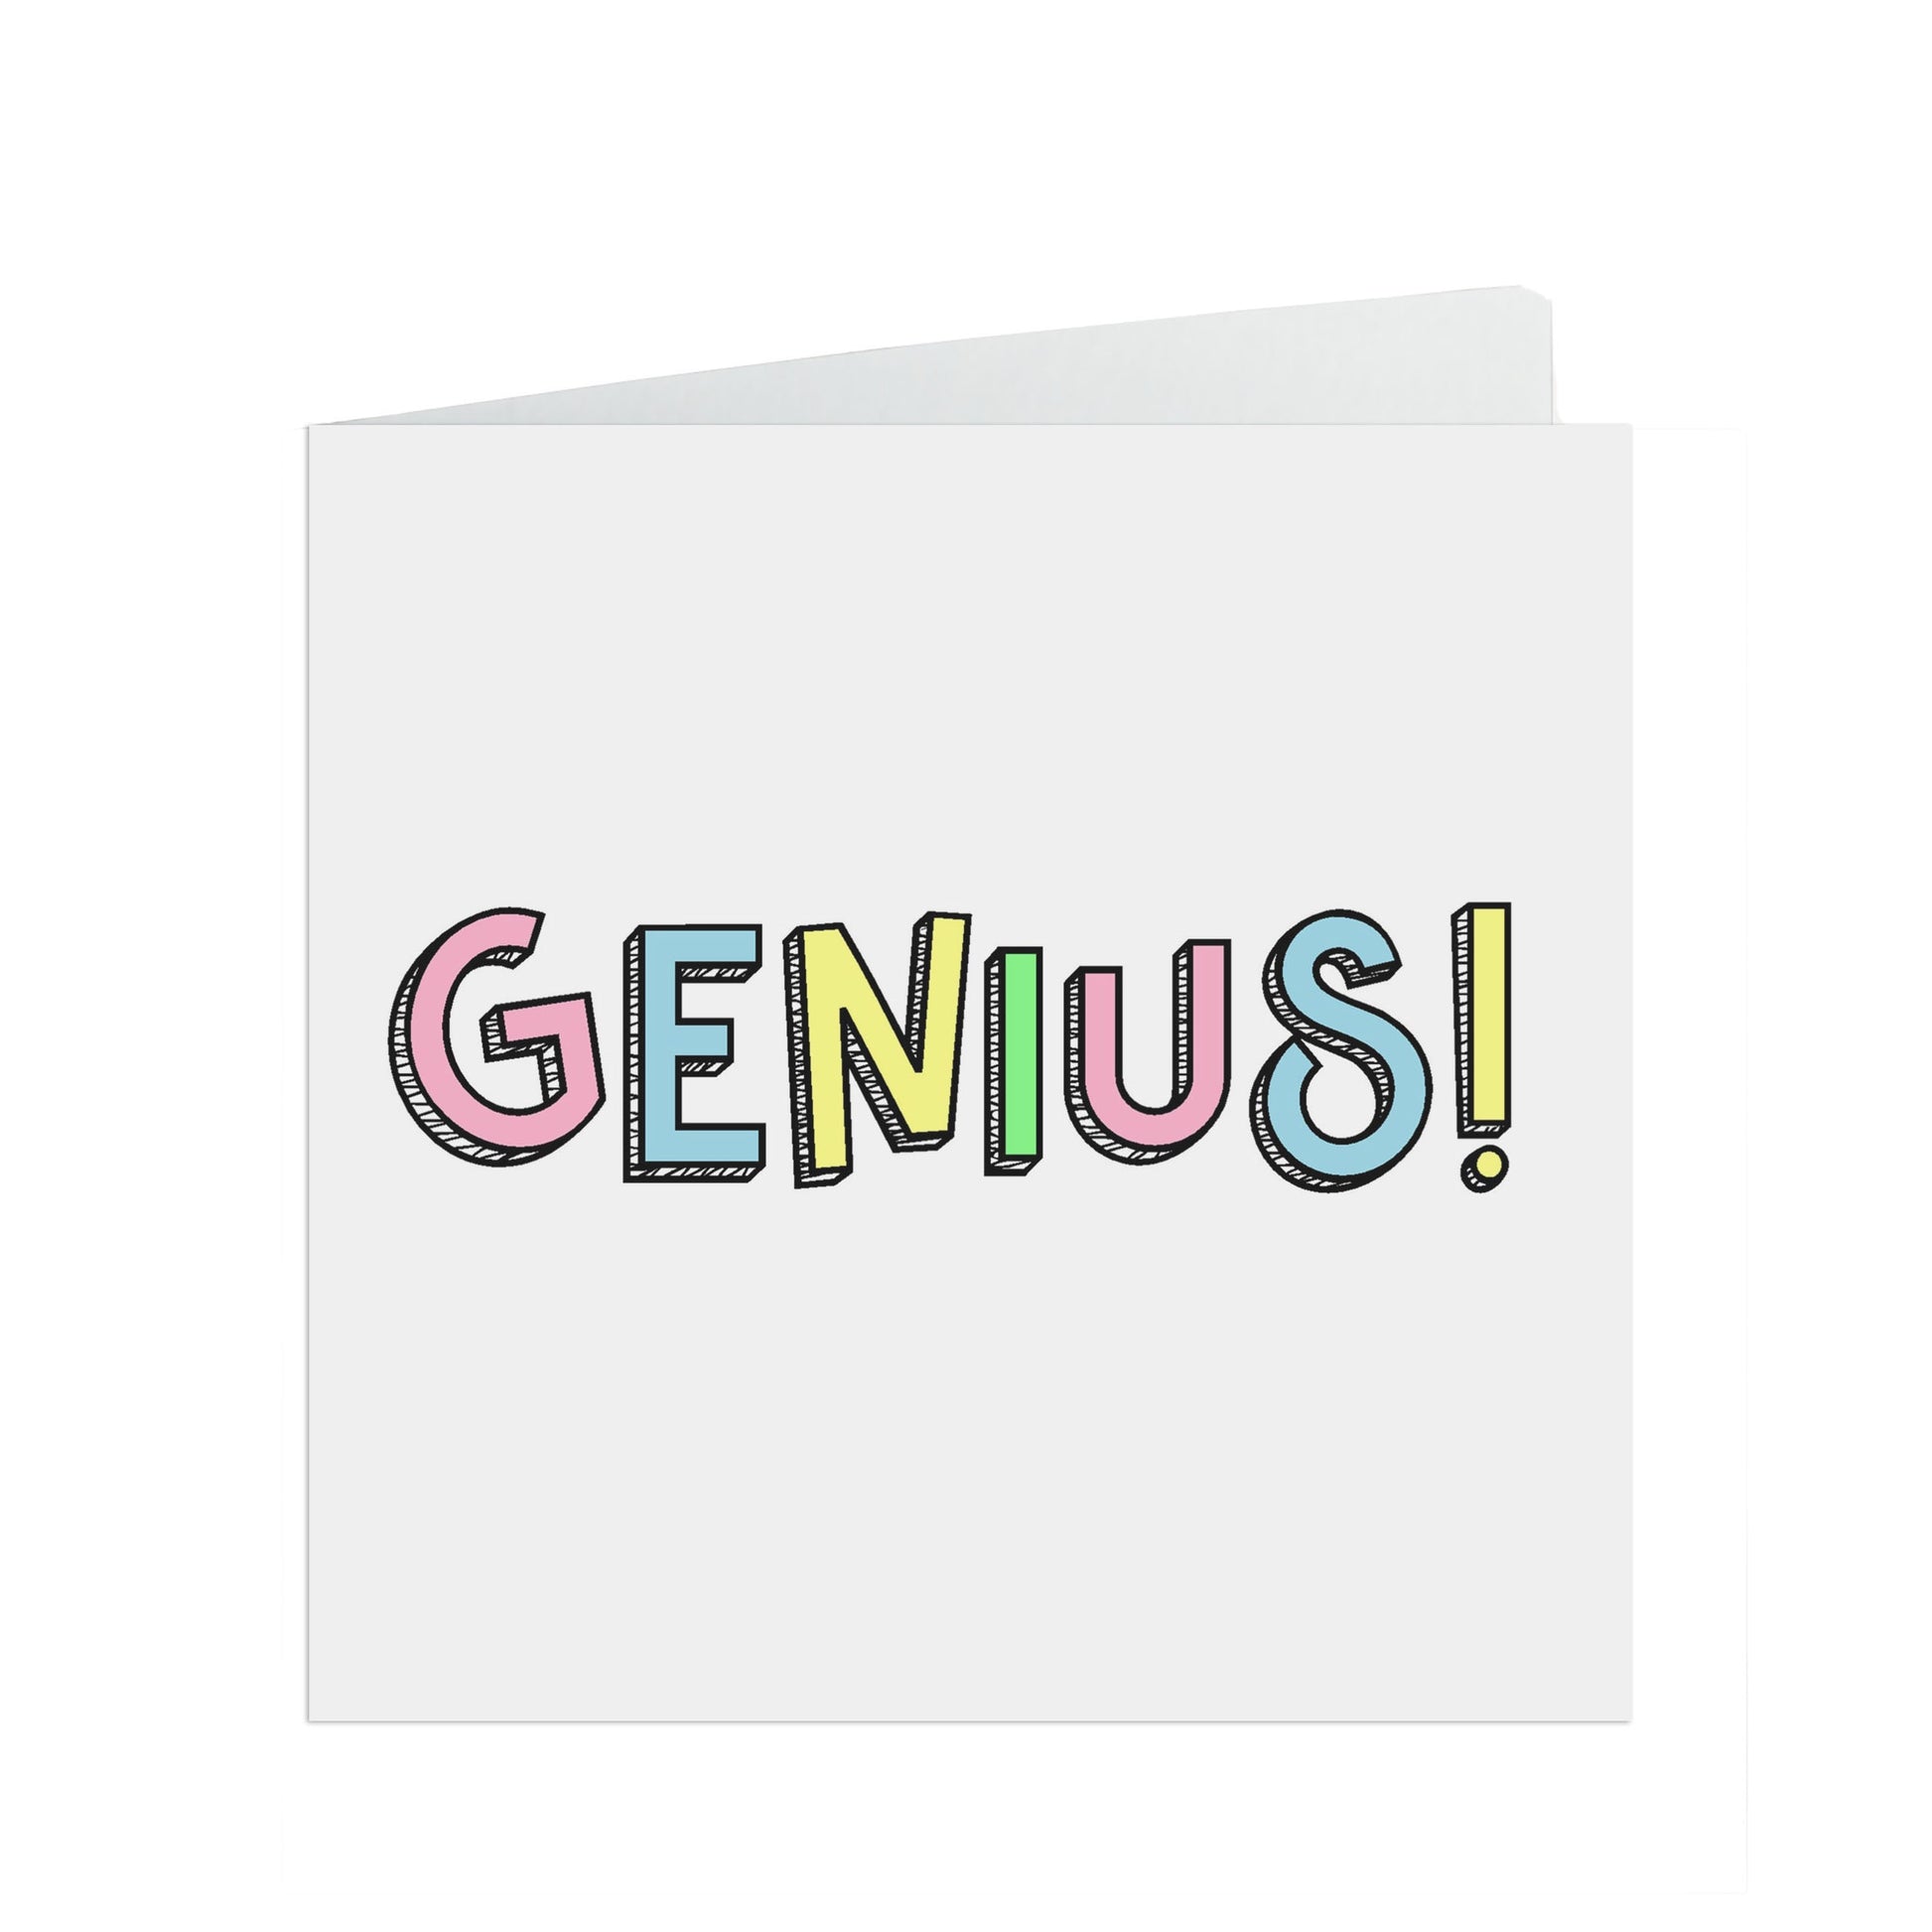 Genius! Congratulations passed exams or graduated funny card